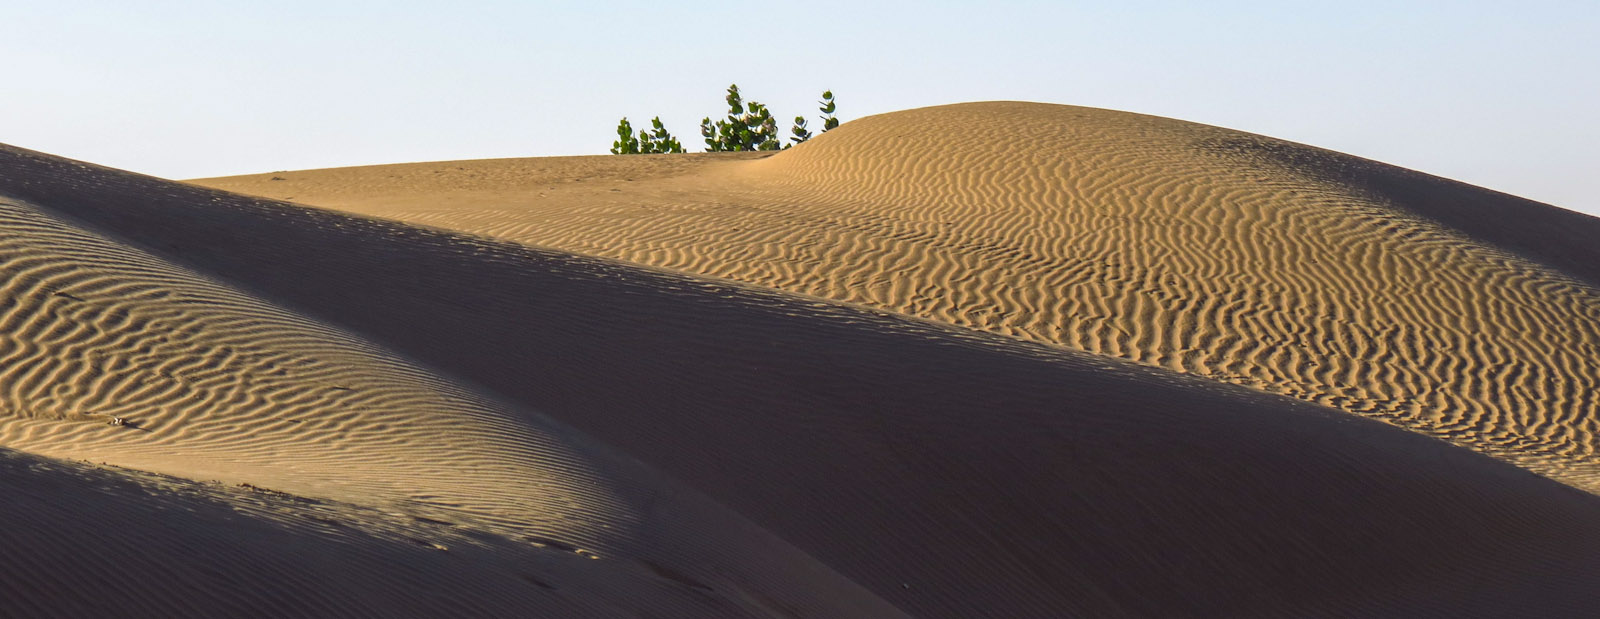 dunes-waves-jaisalmer-desert